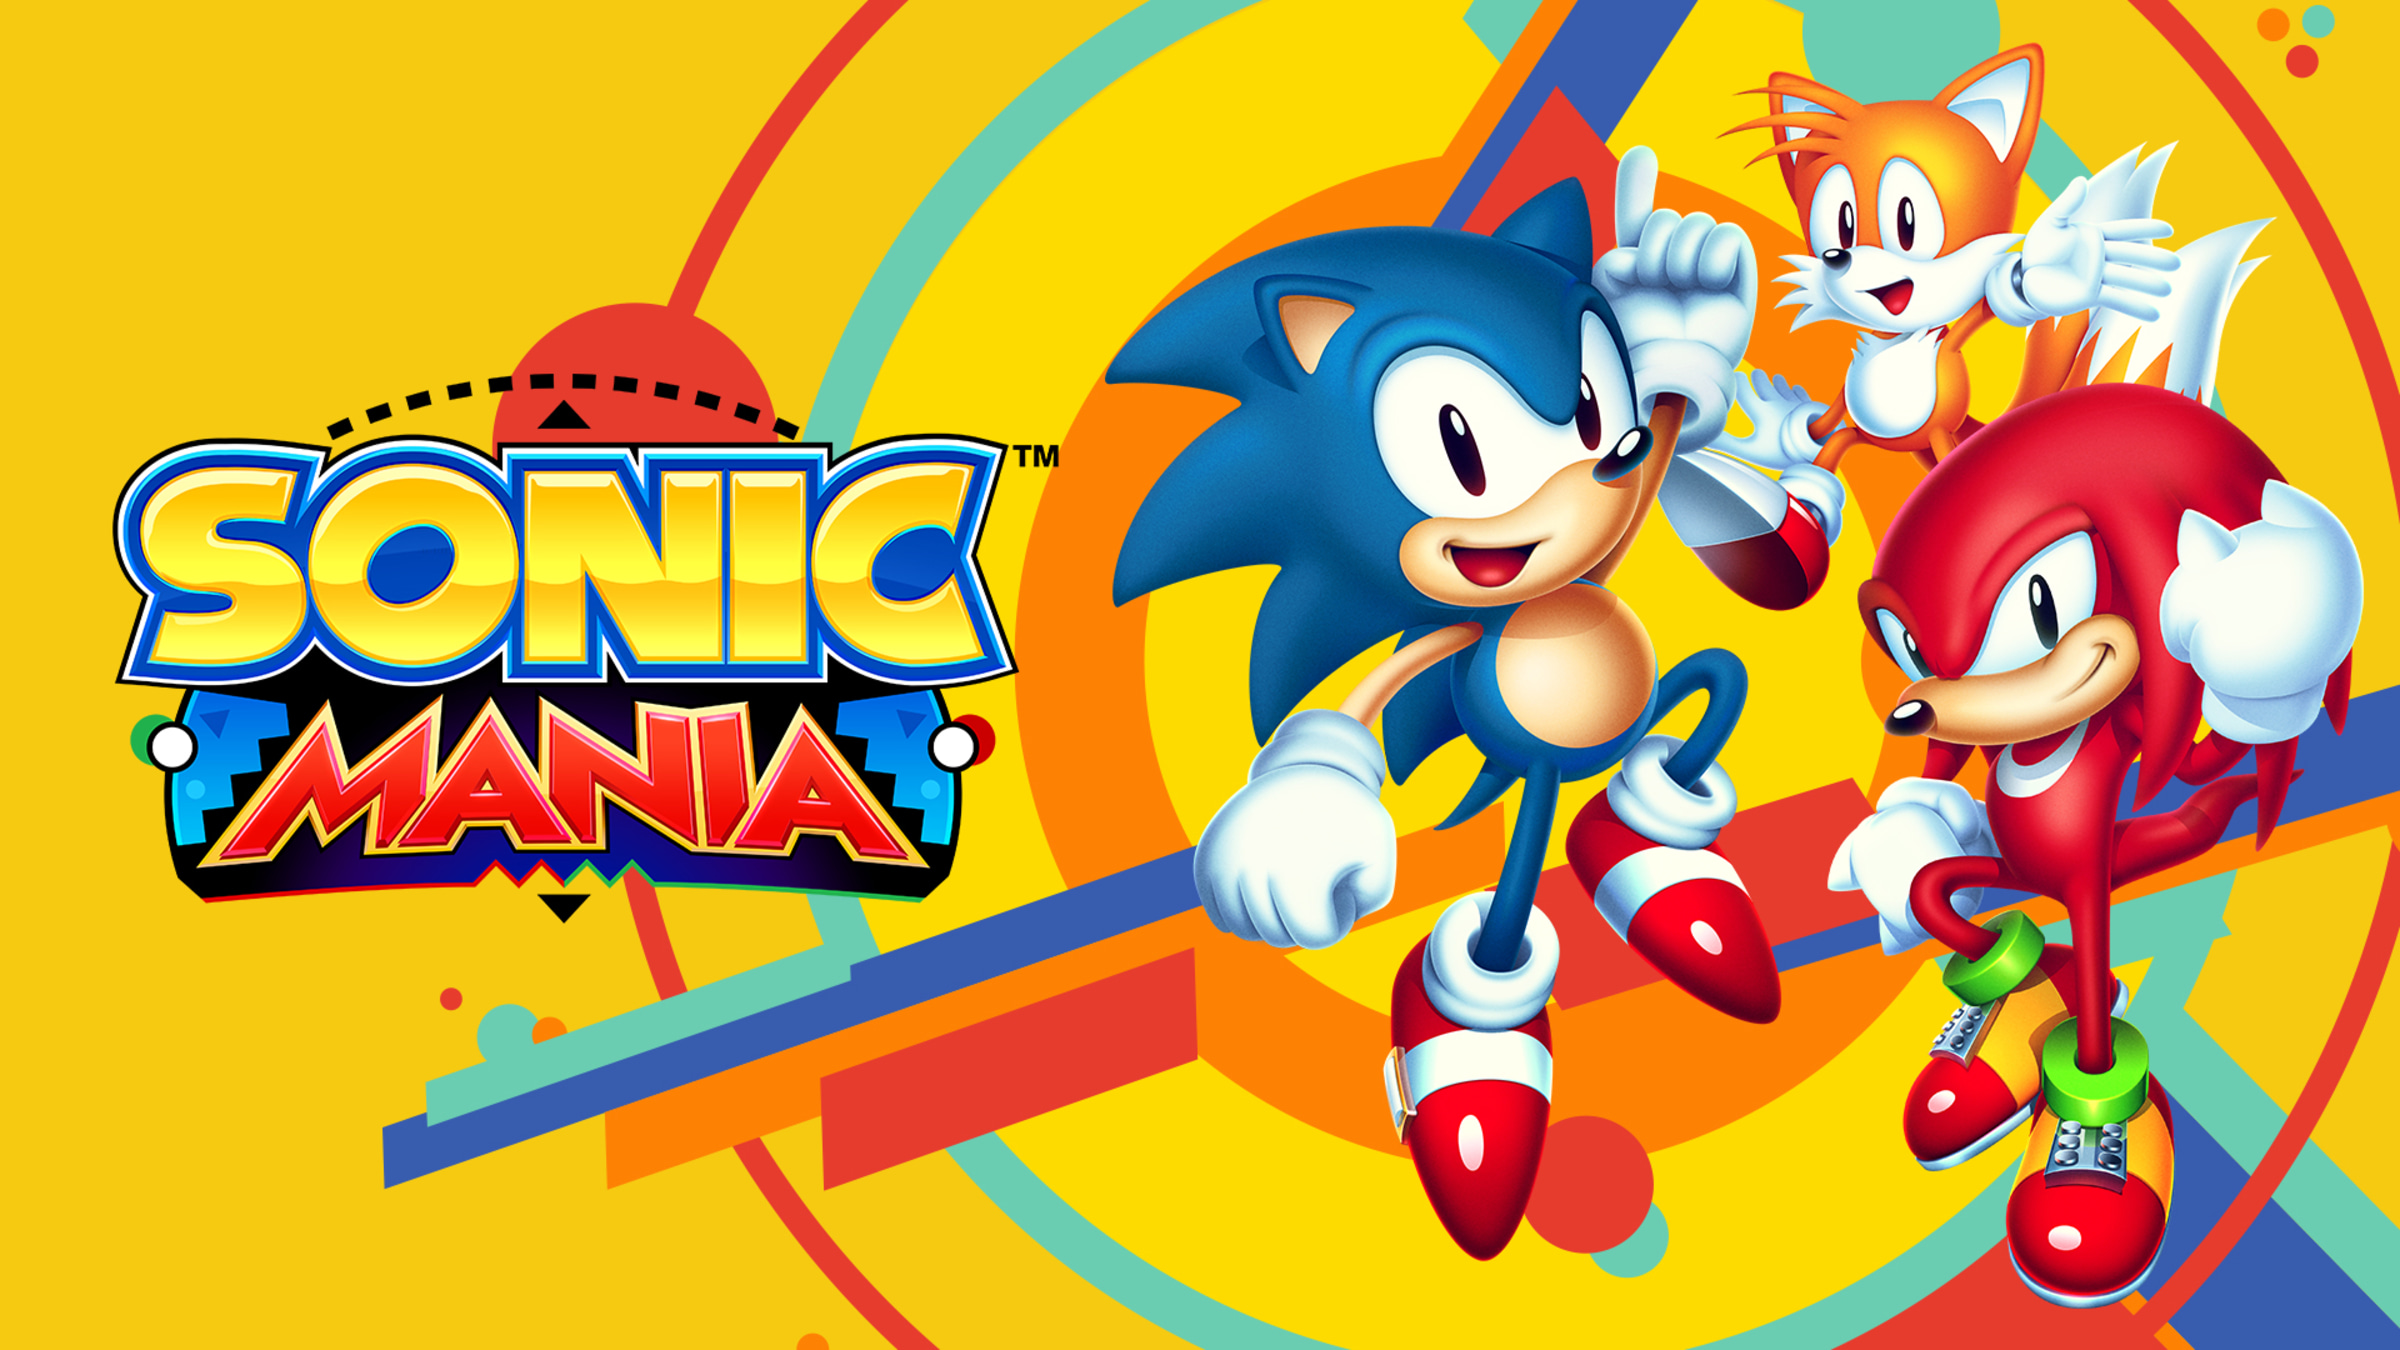  Sonic Mania Plus (Nintendo Switch) (Nintendo Switch